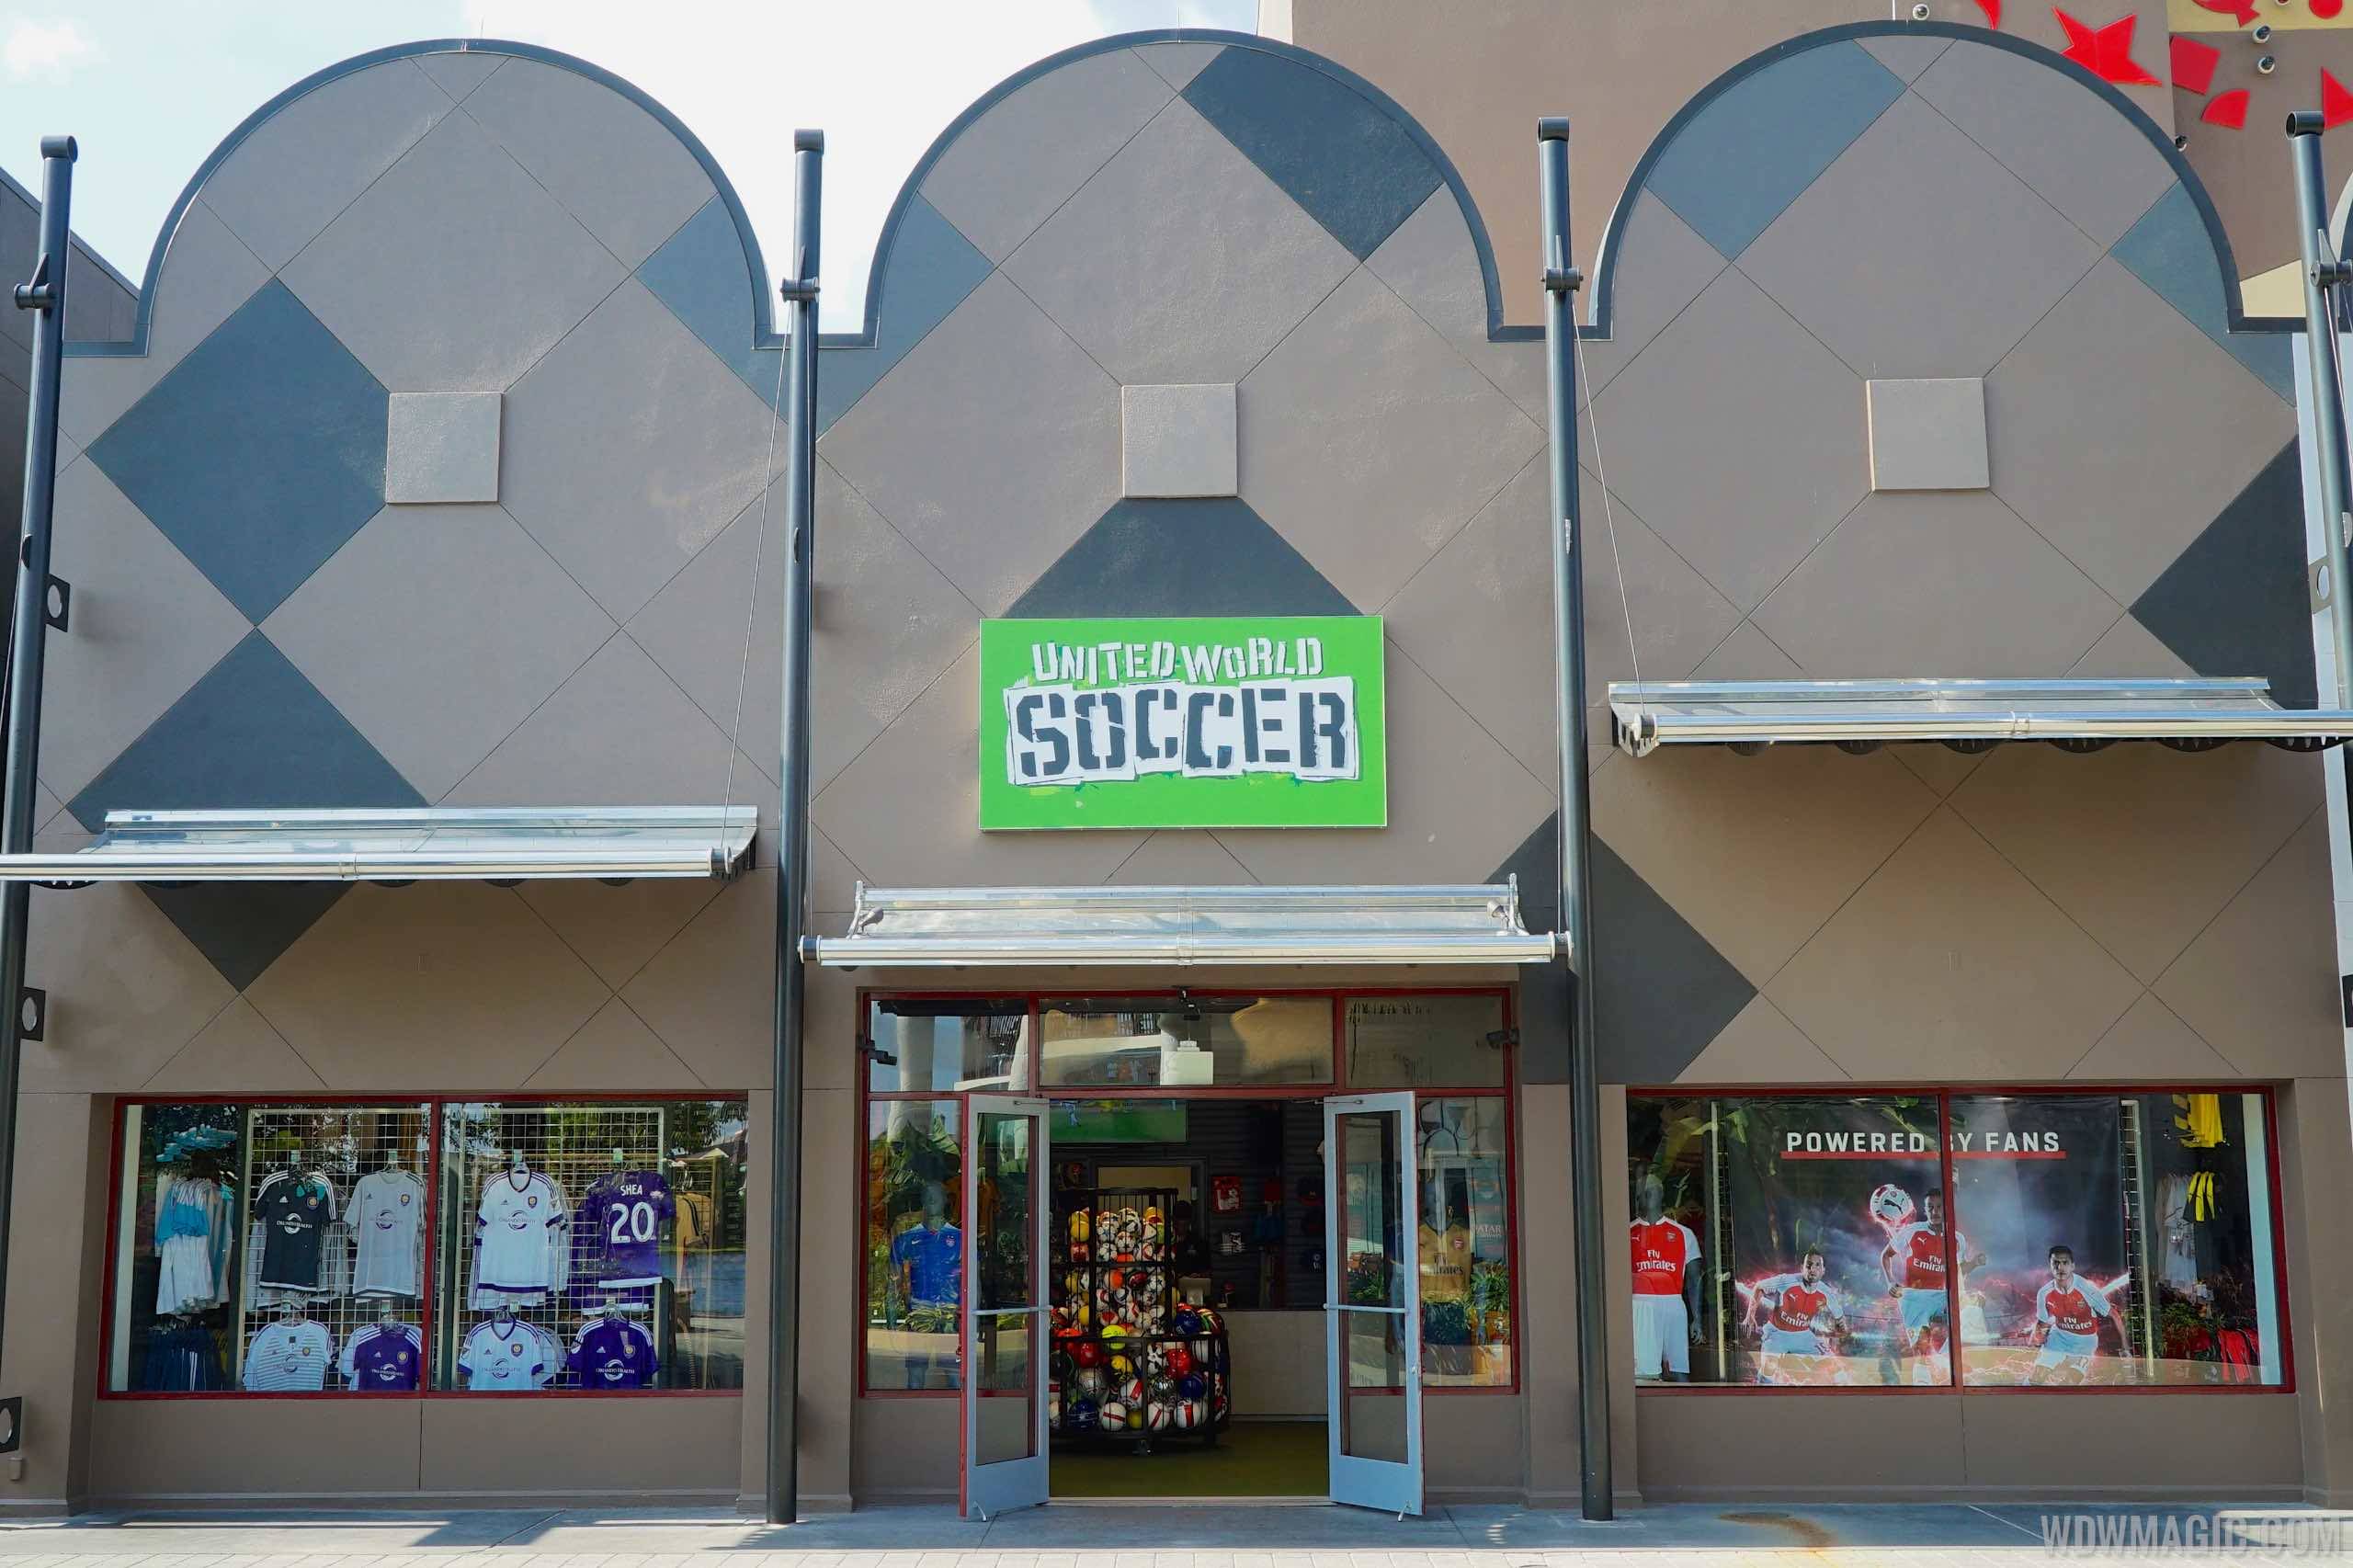 futbolmania (Now Closed) - Sporting Goods Retail in Sol